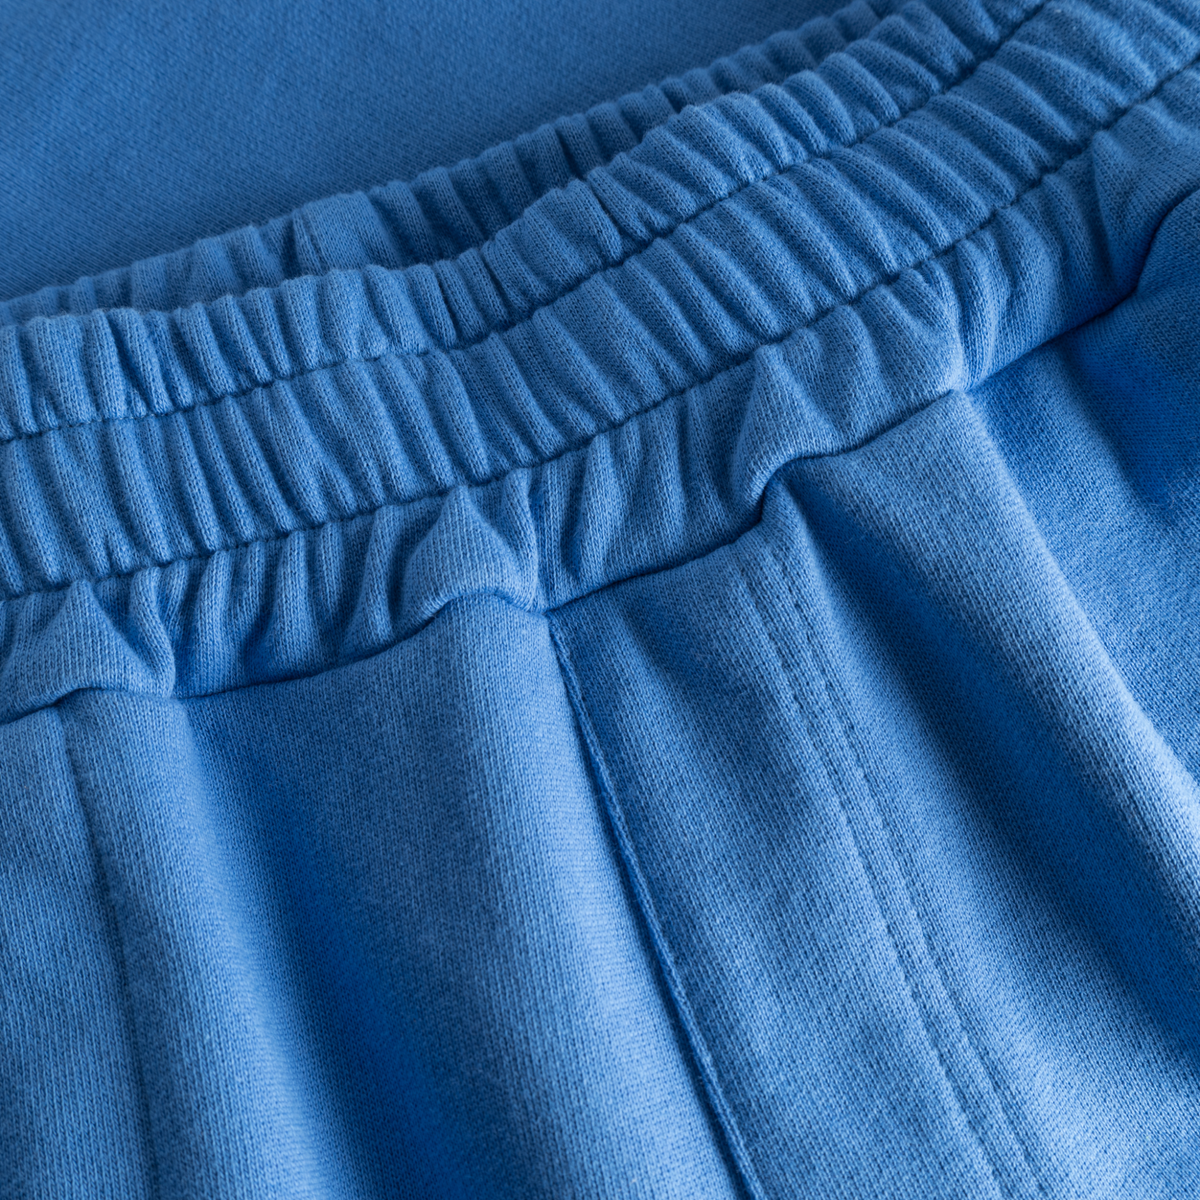 Cura Shorts - Azure Blue